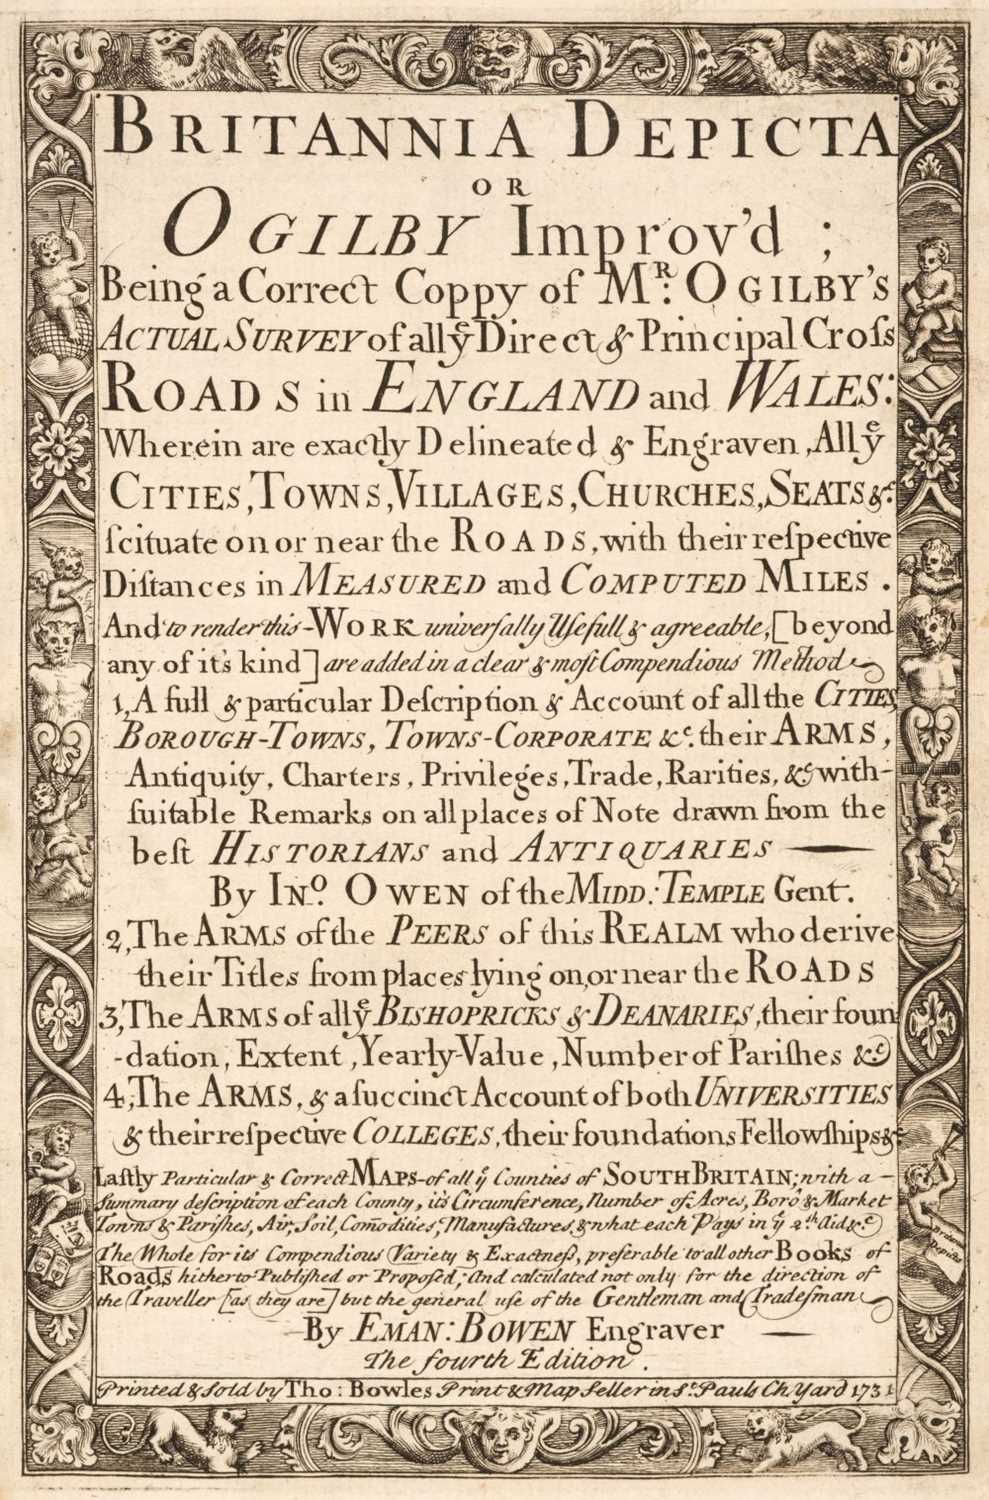 Lot 49 - Owen (John & Bowen Emanuel). Britannia Depicta or Ogilby Improv'd, Thos. Bowles, 1731